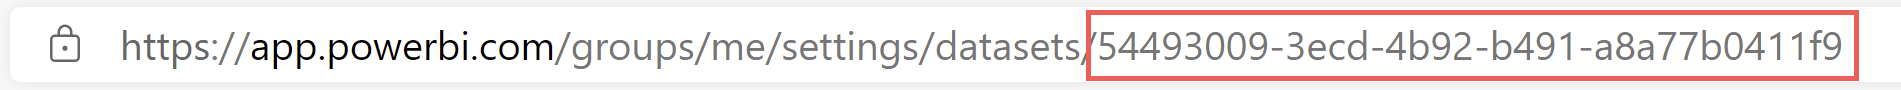 Screenshot of example dataset ID.